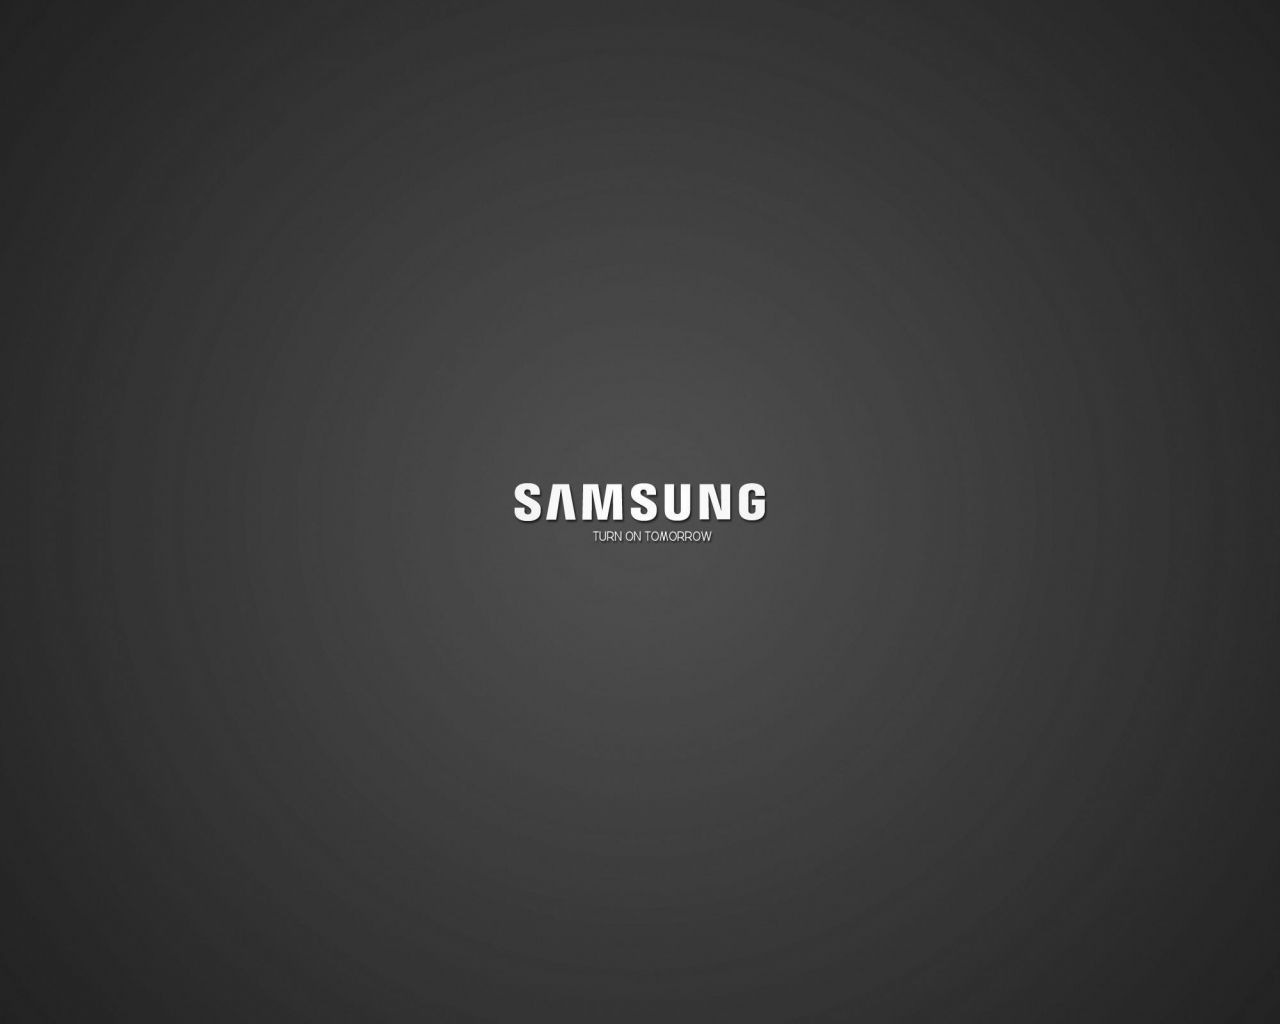 Samsung Logo 1280x1024 Wallpapers - Wallpaper Cave